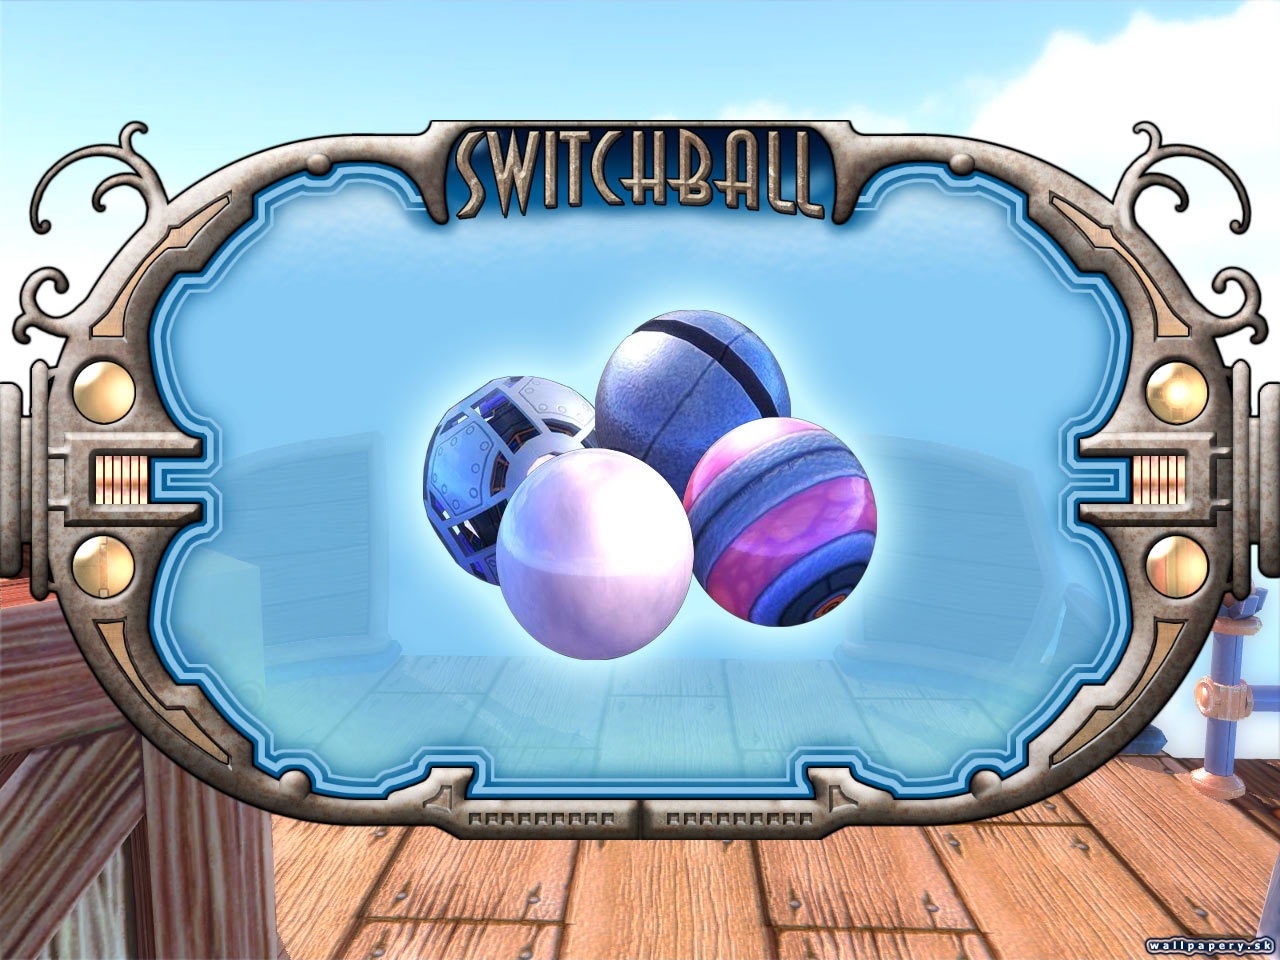 Switchball - wallpaper 3